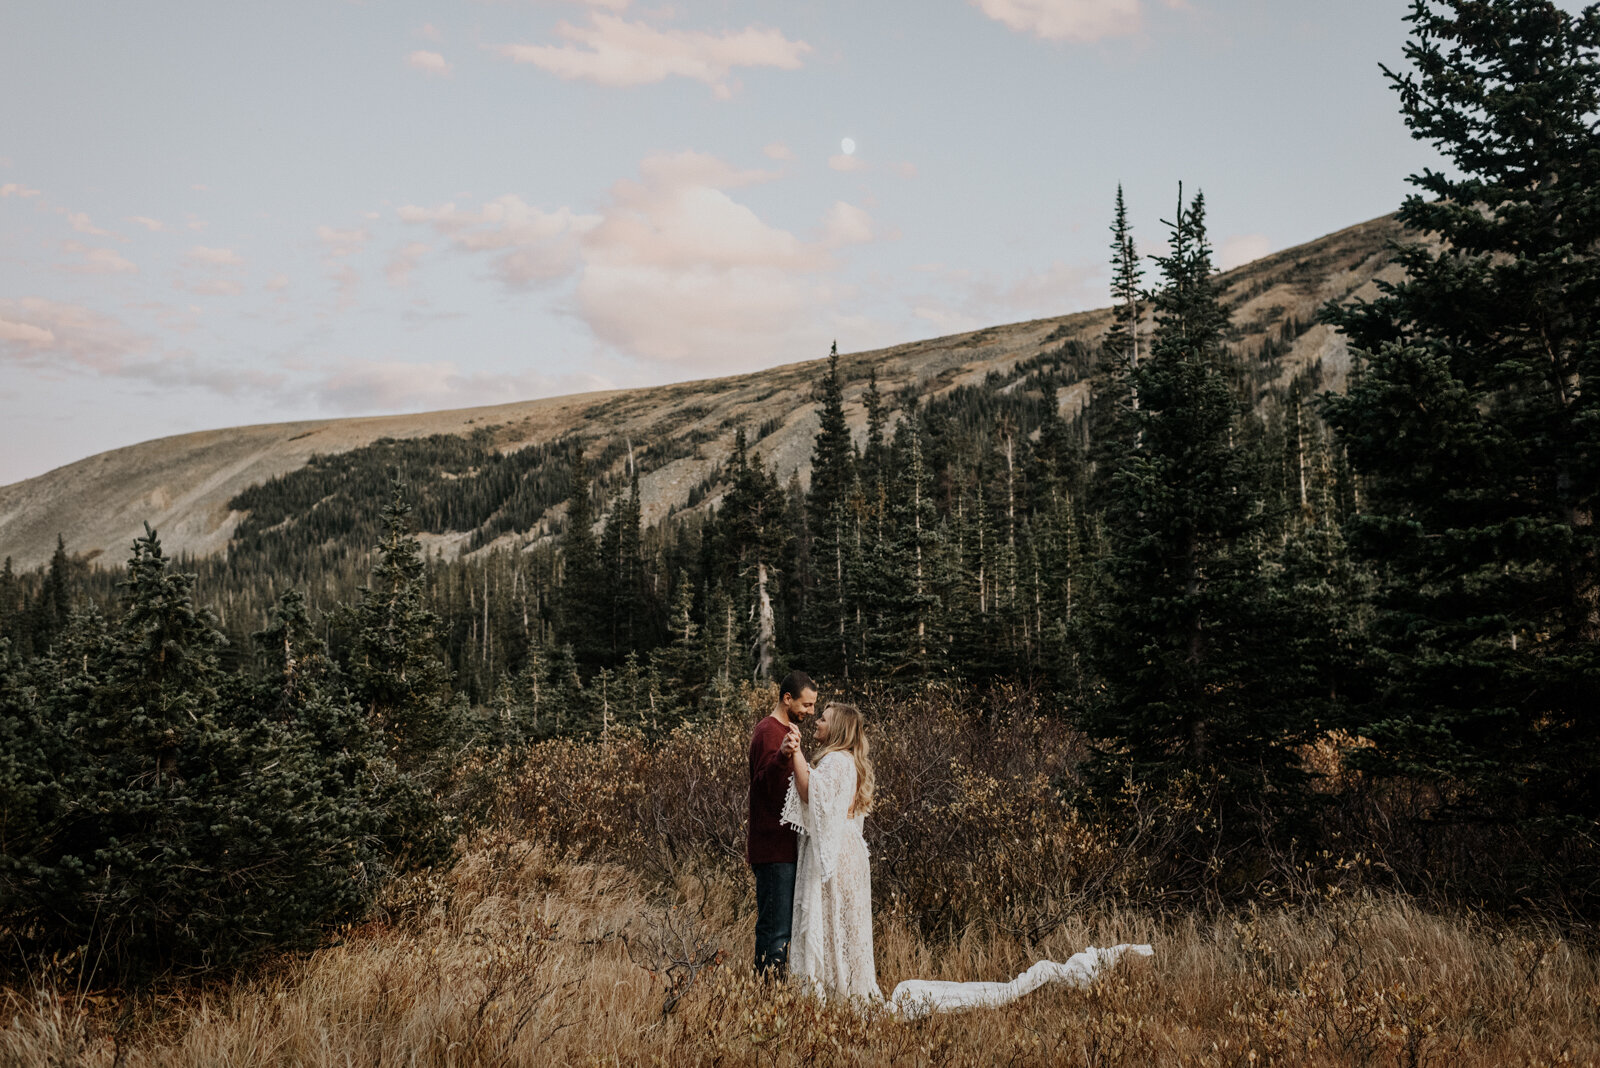 Indian Peaks Wilderness Area Adventure Wedding Photographer Colorado